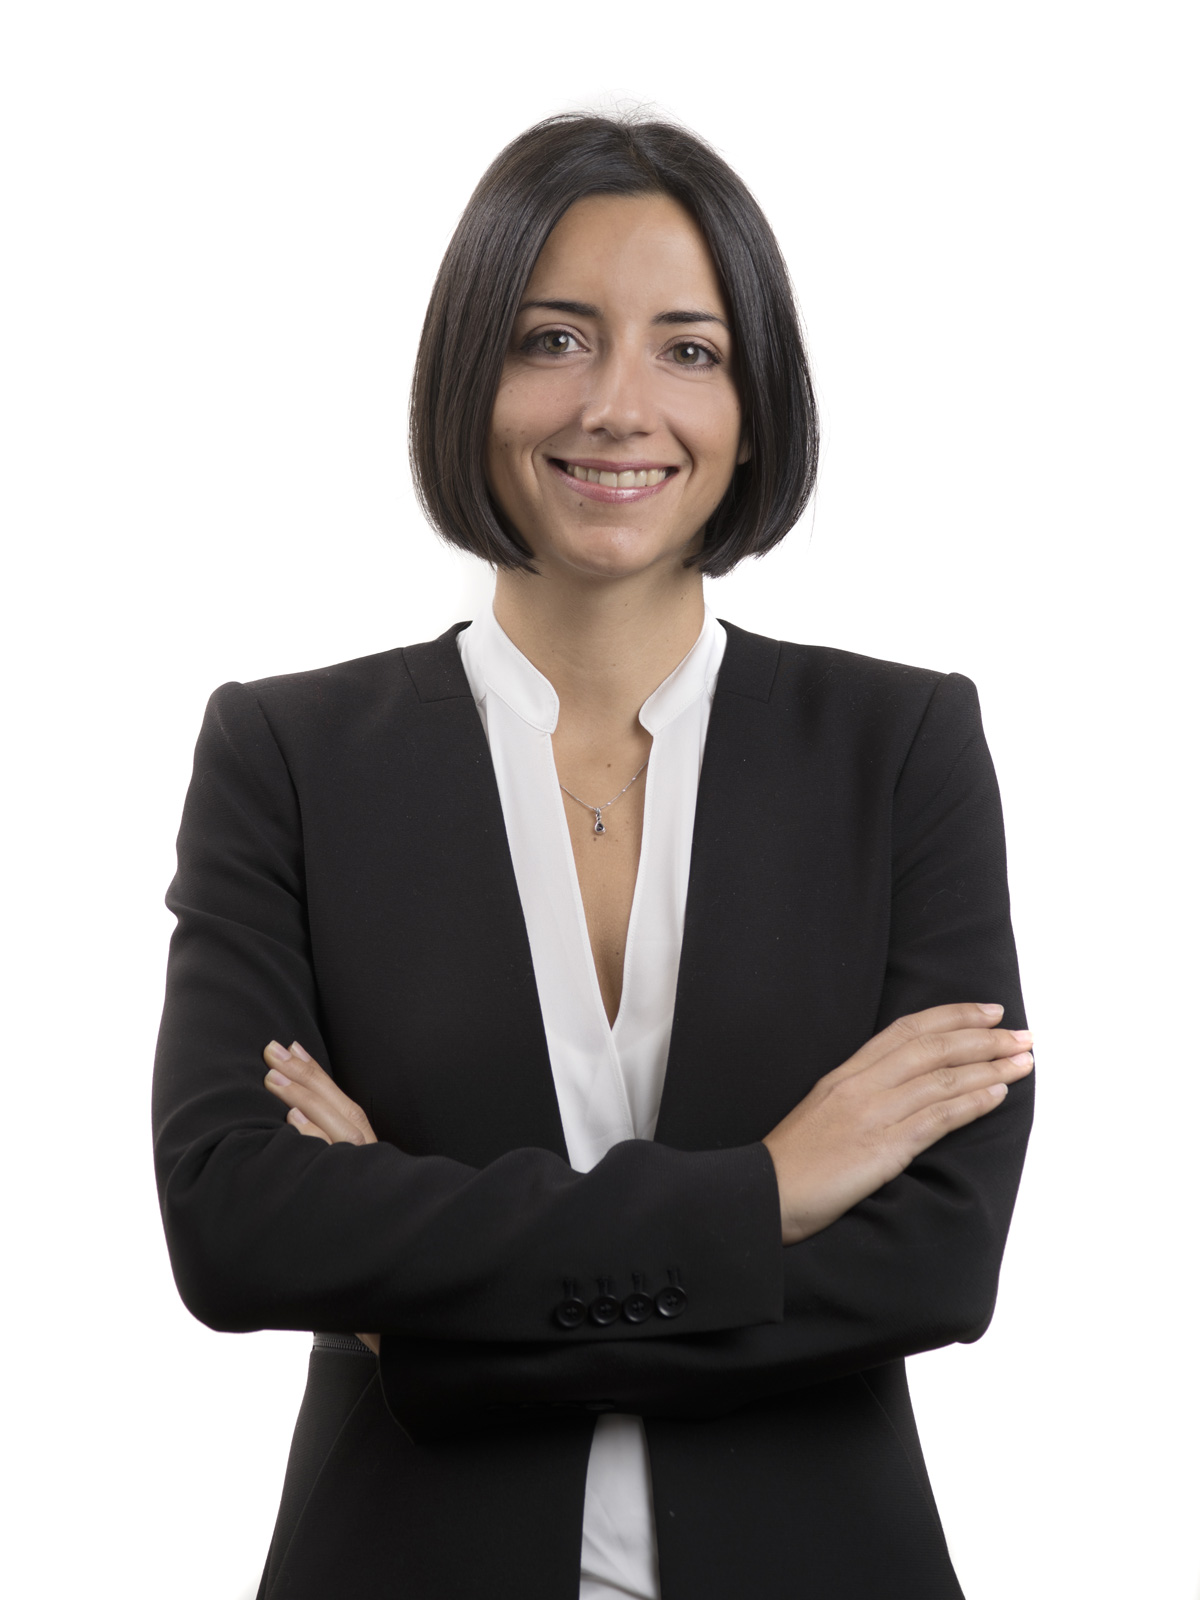 Dolores Bentolila, arbitrator, counsel, consultant, lawyer, professor